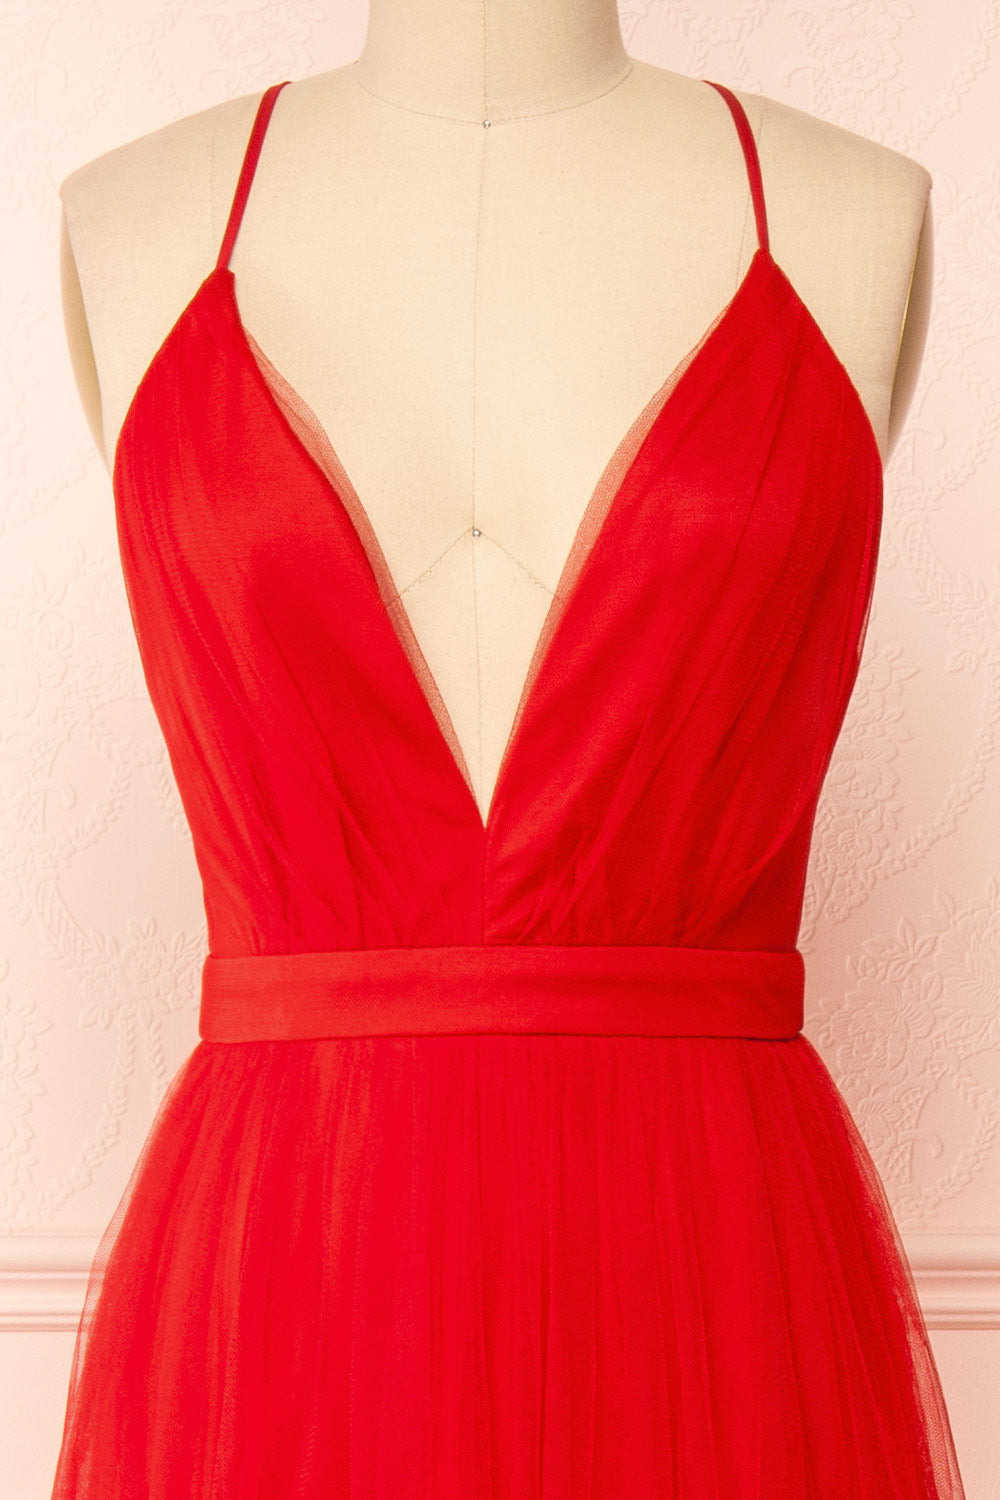 Decollete, Female Breast. Neckline Red Dress And Fur Collar. Stock